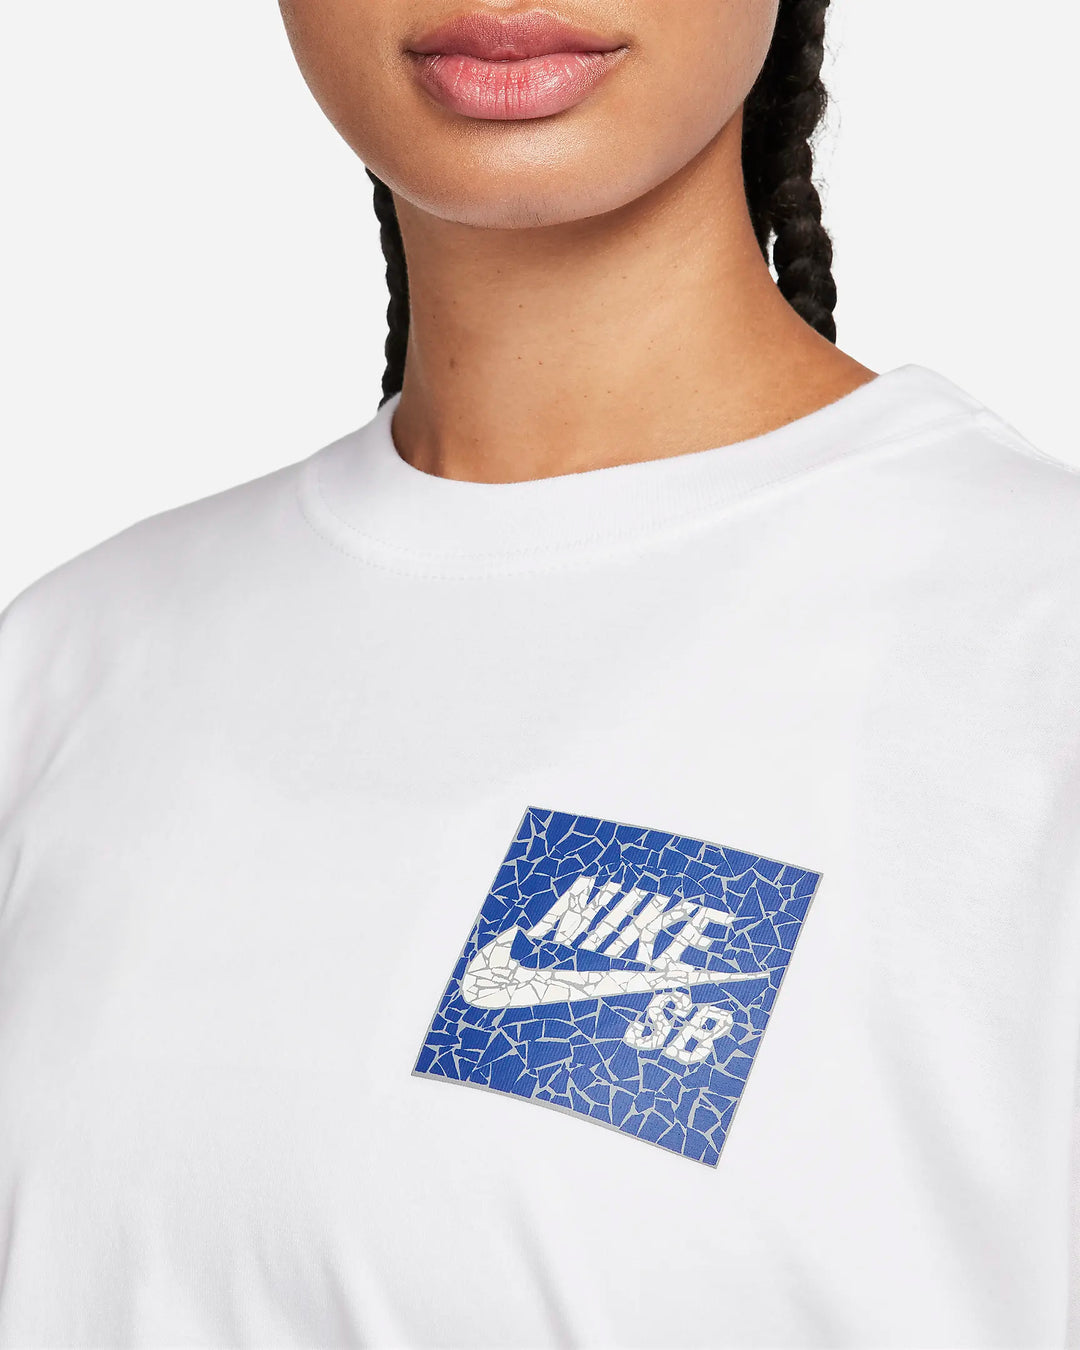 Nike SB Skate T-Shirt  - WHITE - Sun Diego Boardshop